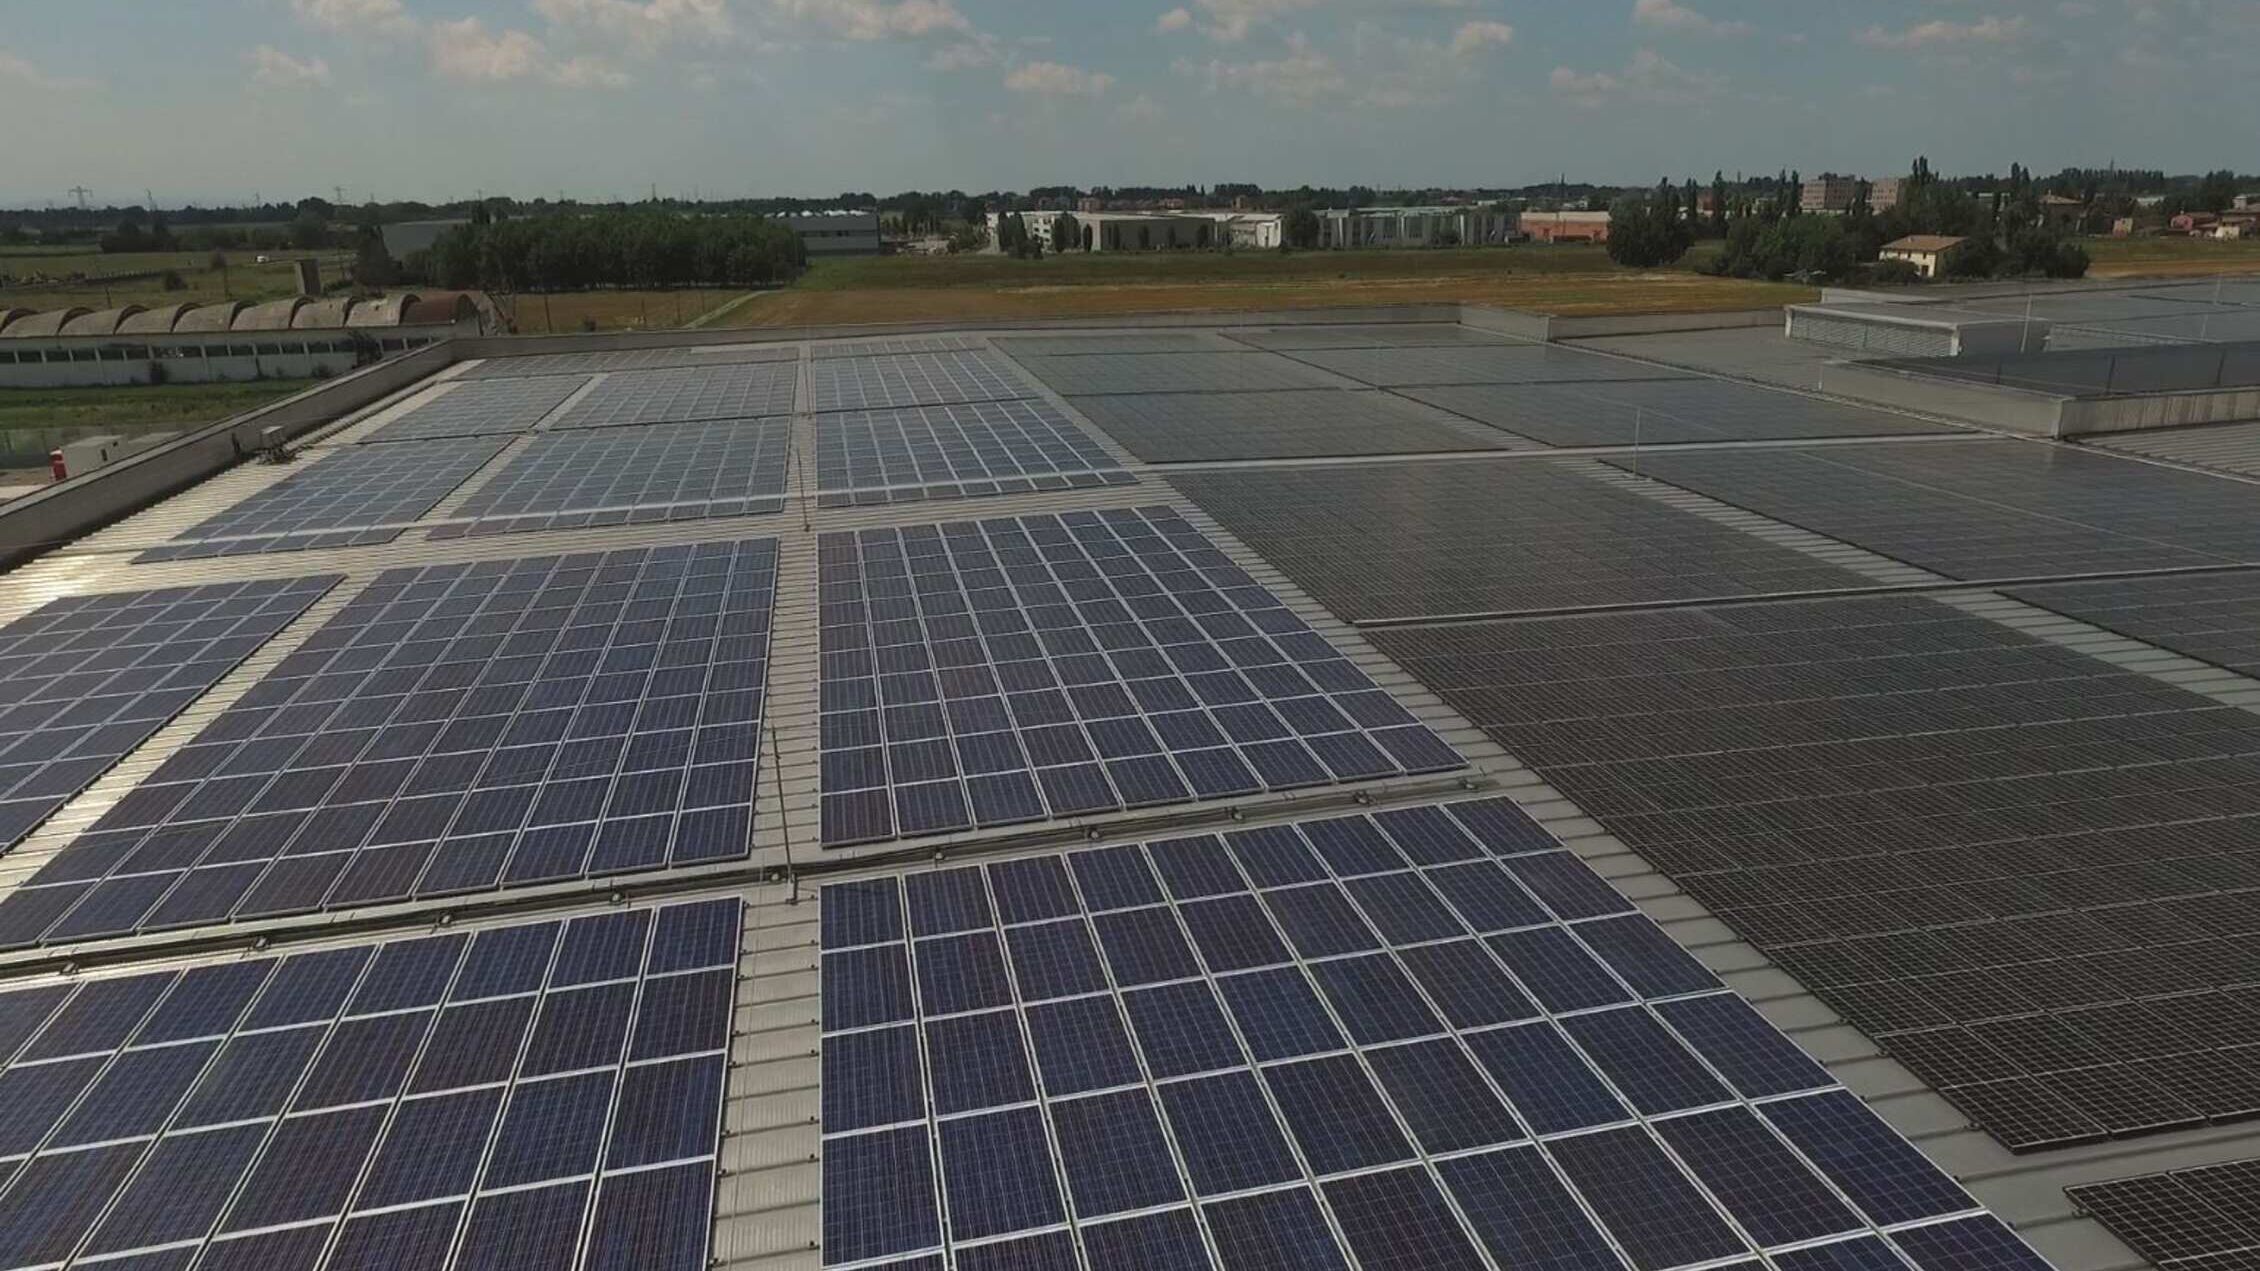 Philip Morris: paneles solares en el techo de Philip Morris Manufacturing and Technology Bolonia en Crespellano en Emilia-Romaña